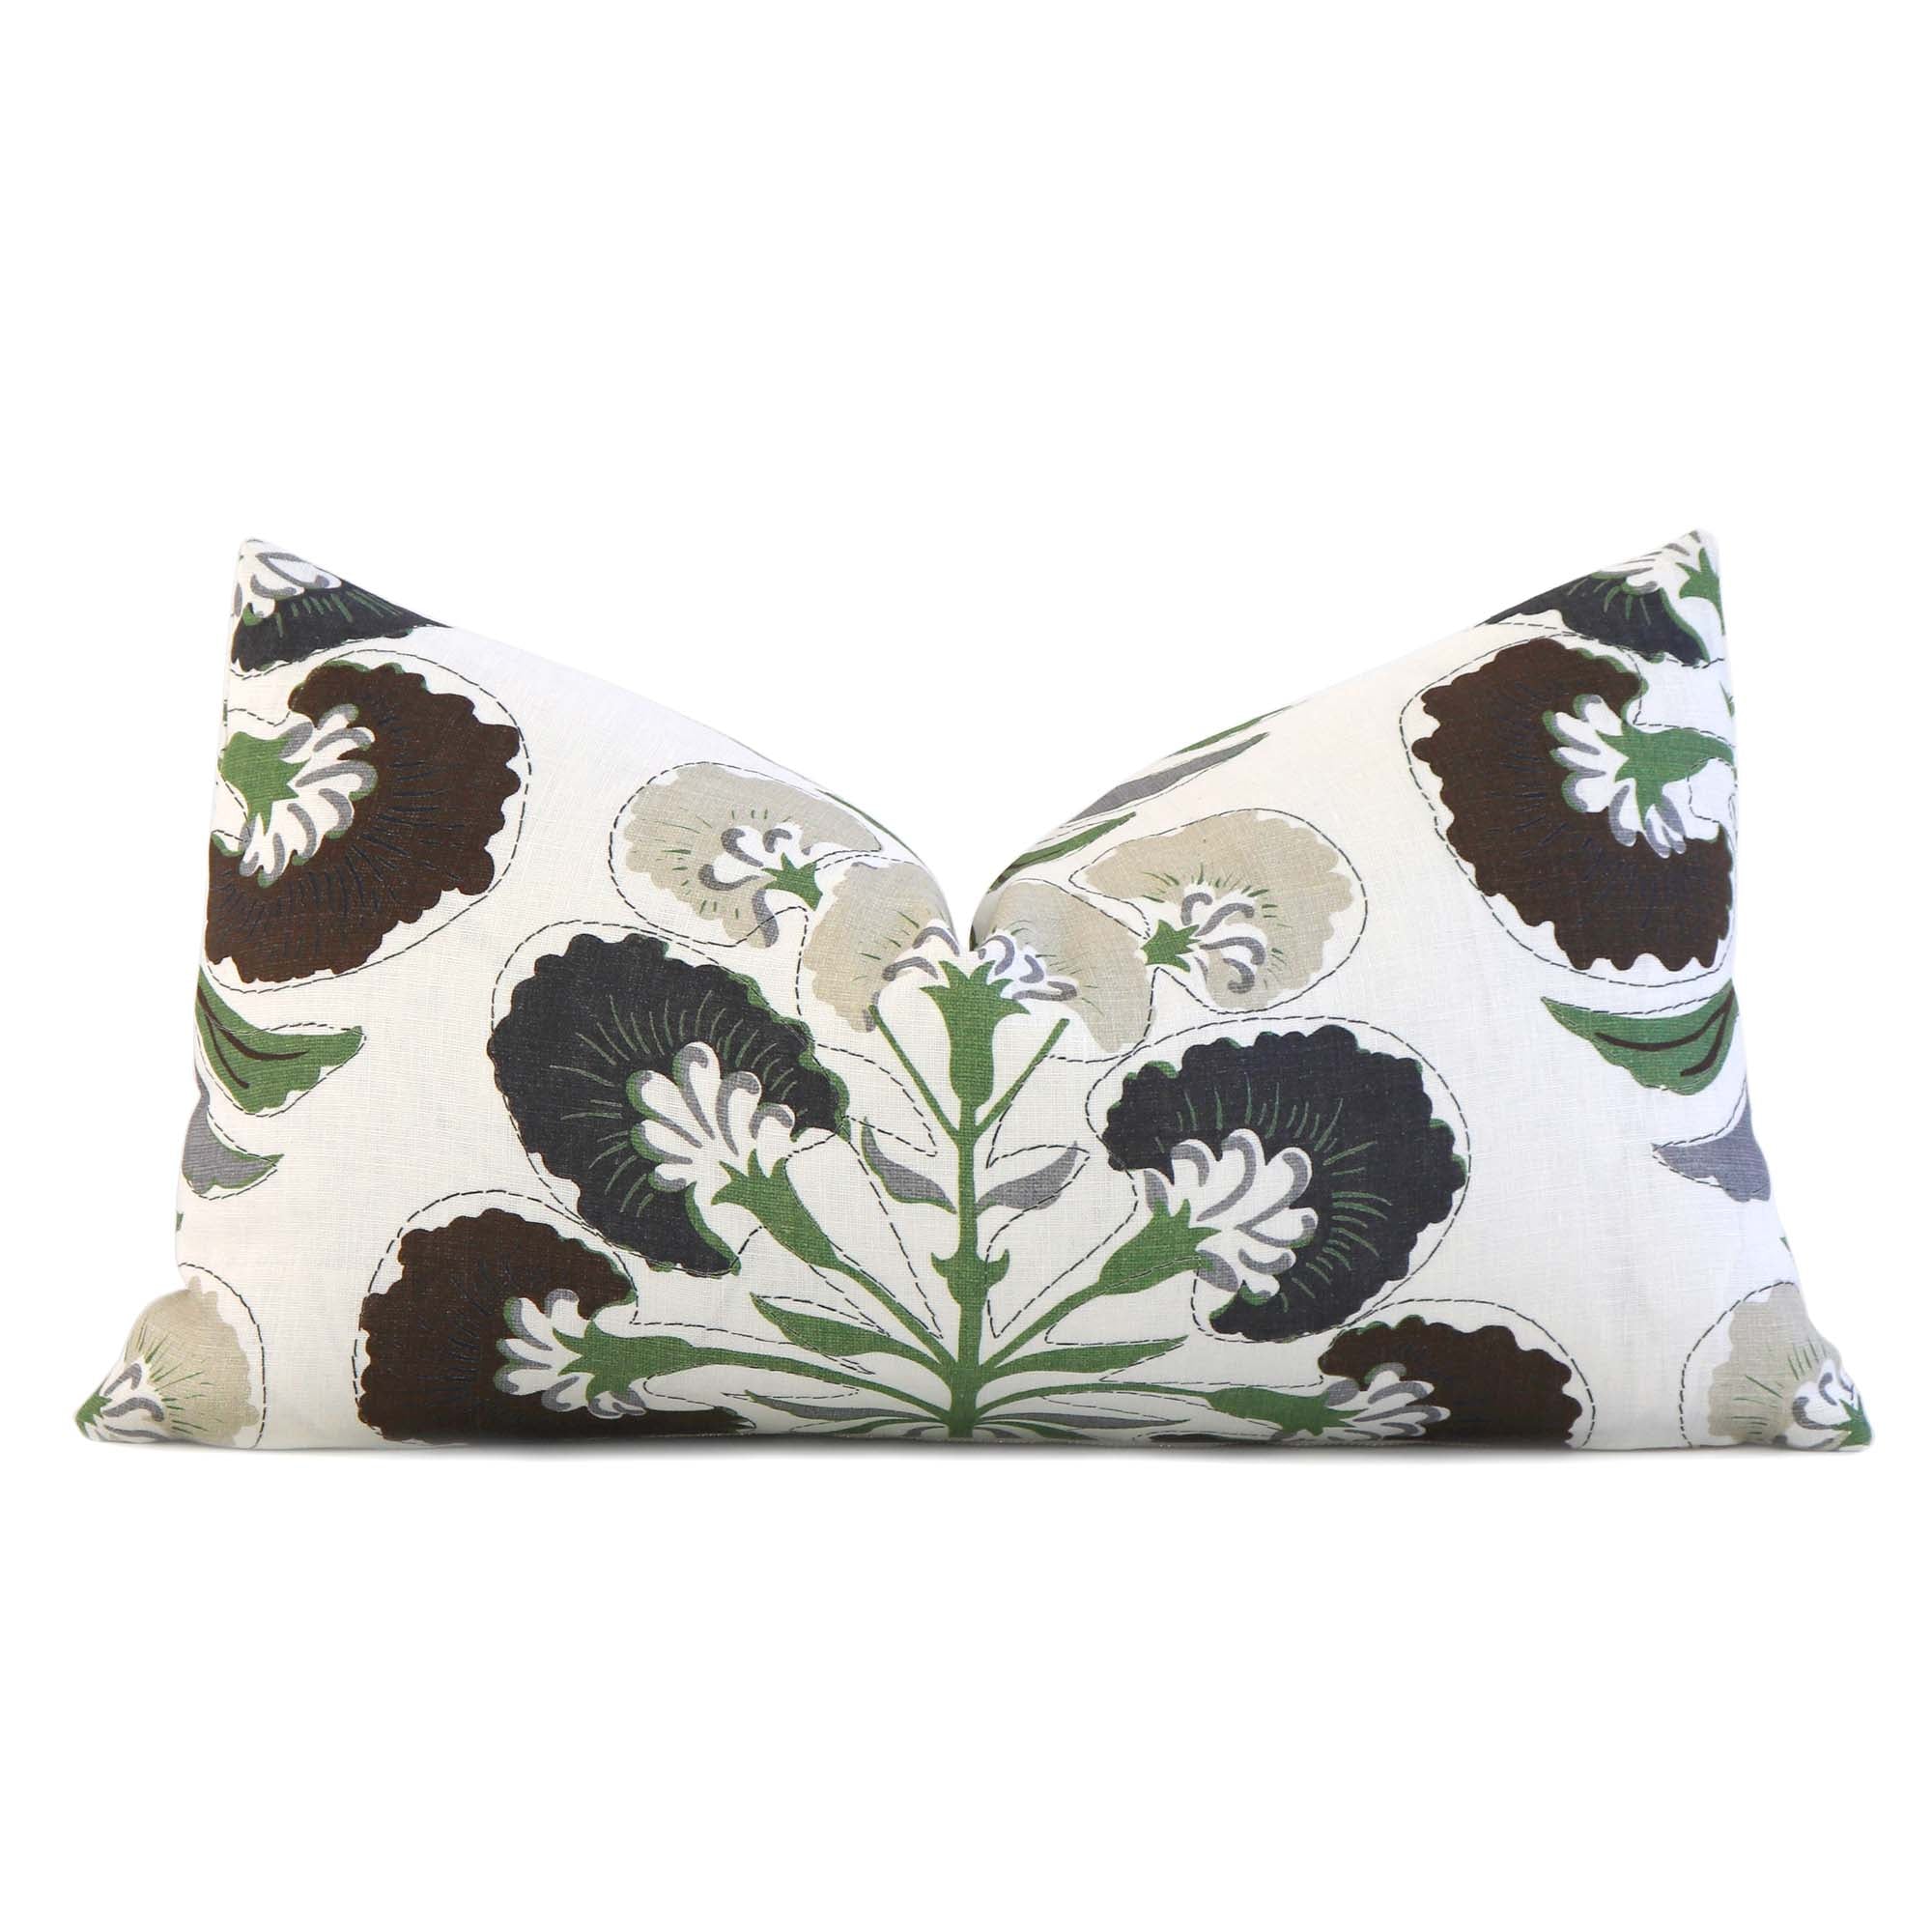 Thibaut Tybee Tree Black and Green Floral Block Print Designer Linen Luxury Decorative Lumbar Throw Pillow Cover